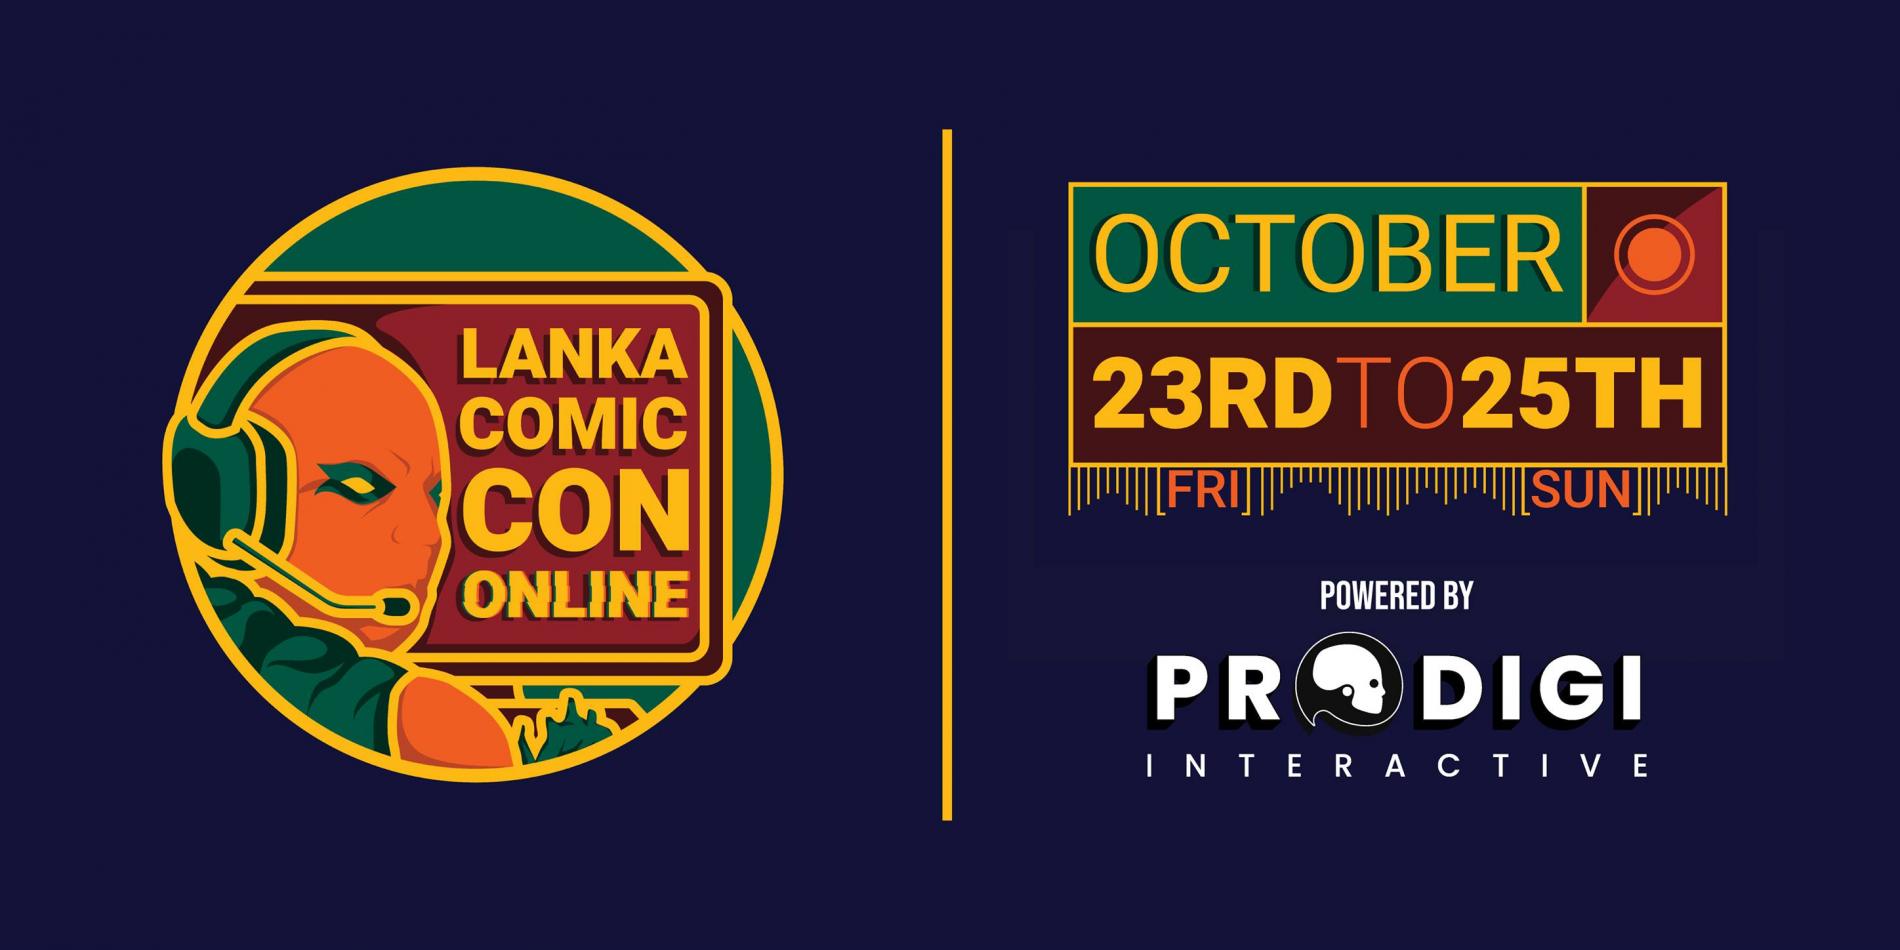 Lanka Comic Con Online